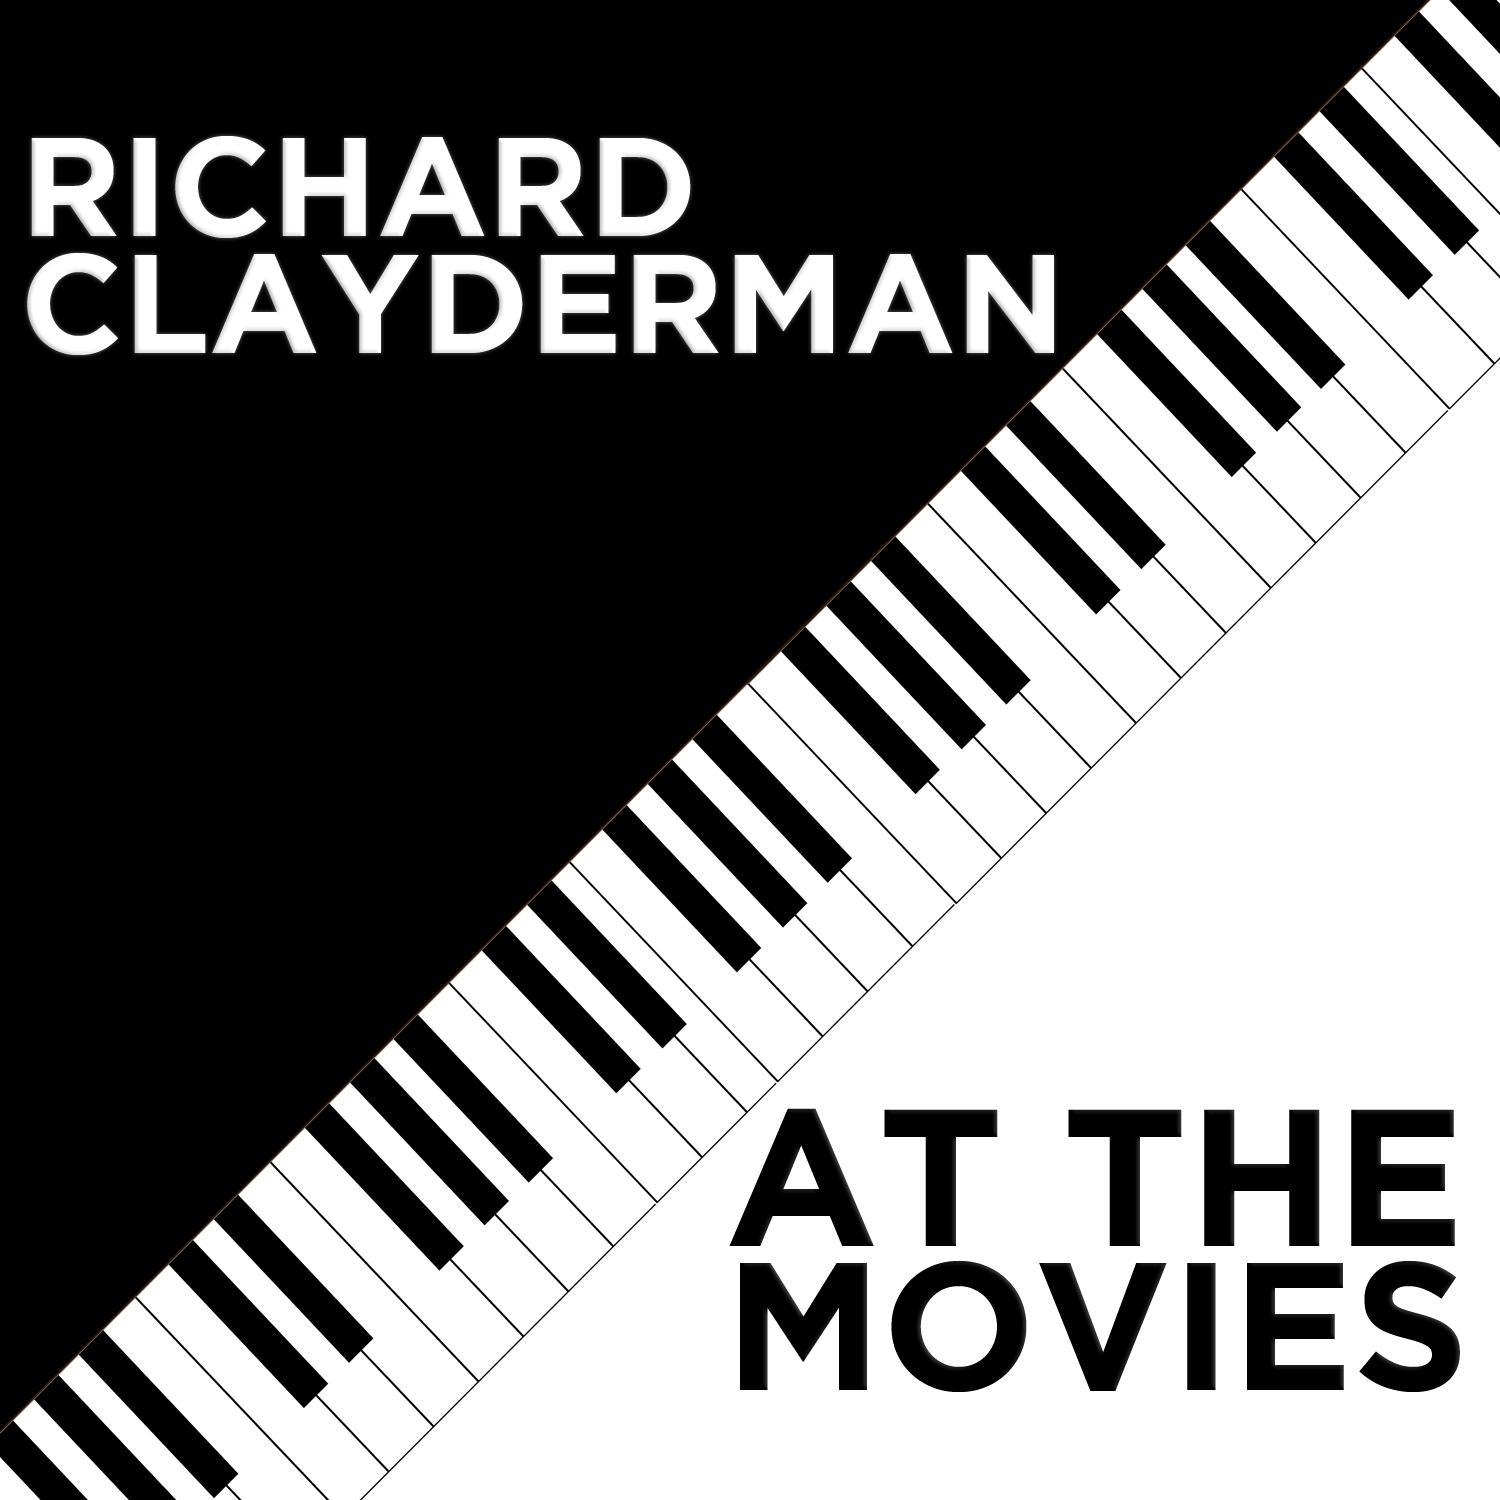 Richard Clayderman At the Movies